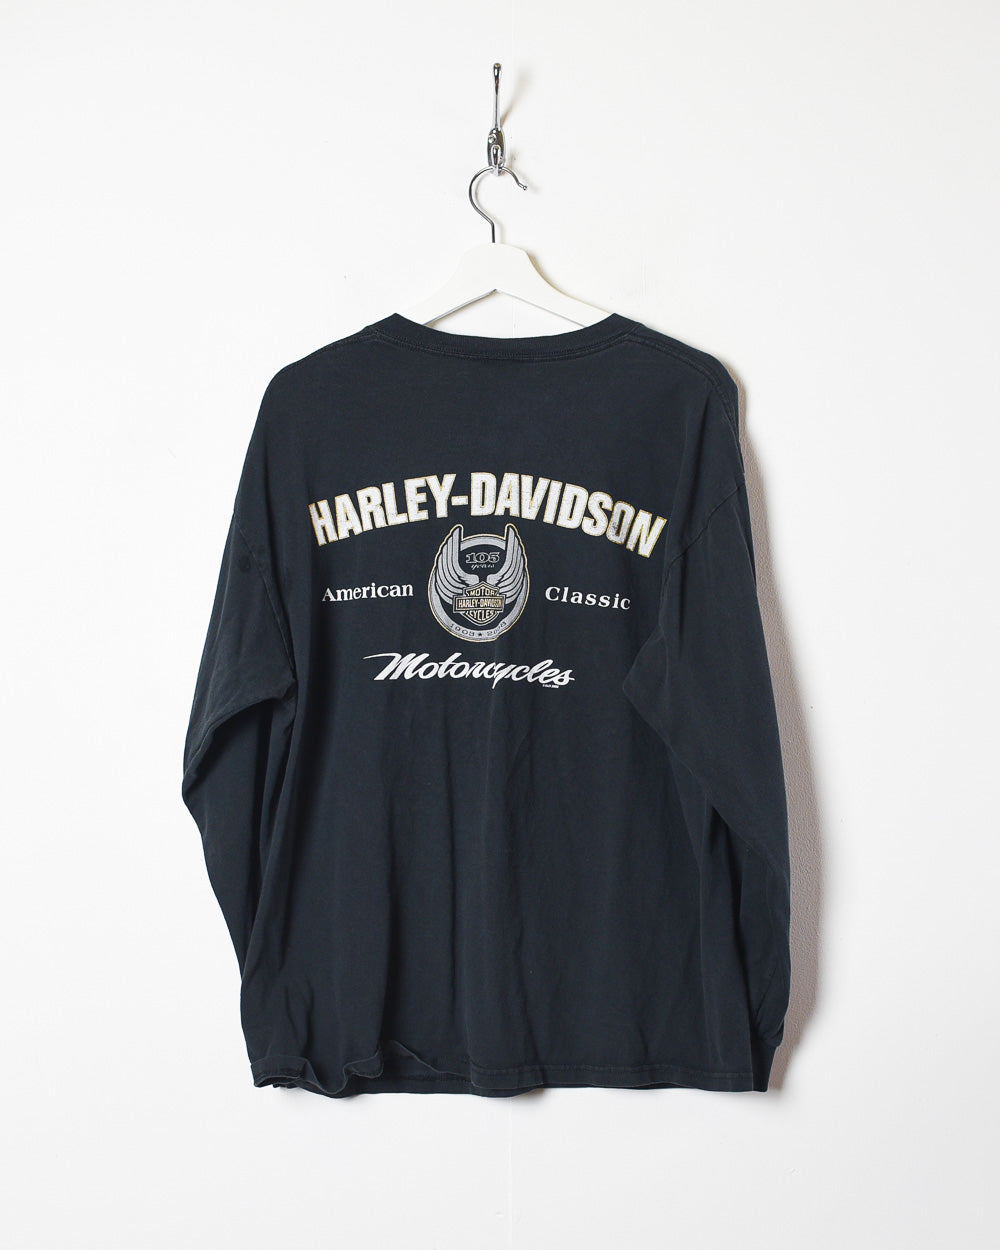 Black Harley Davidson 105 Years Long Sleeved T-Shirt - Medium